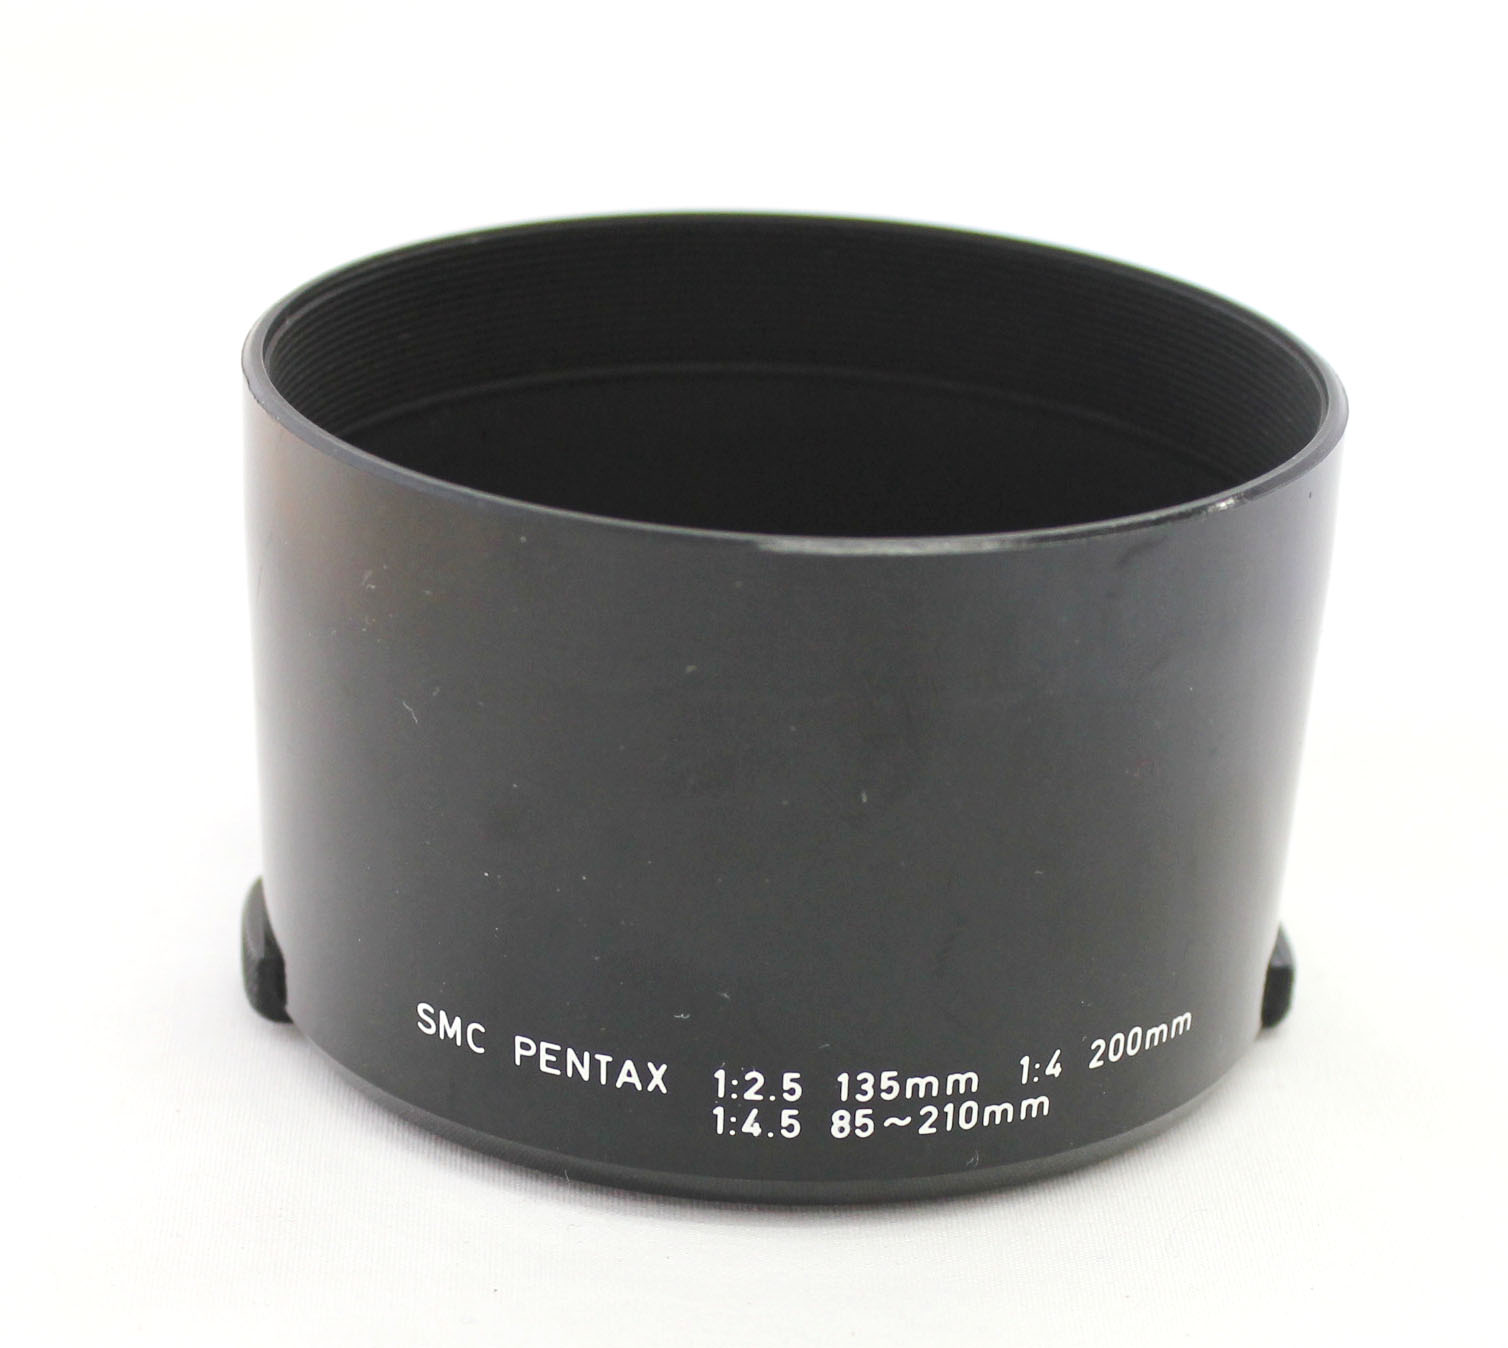  Pentax SMC PENTAX 135mm F/2.5 MF K Mount Lens with Hood from Japan  Photo 9